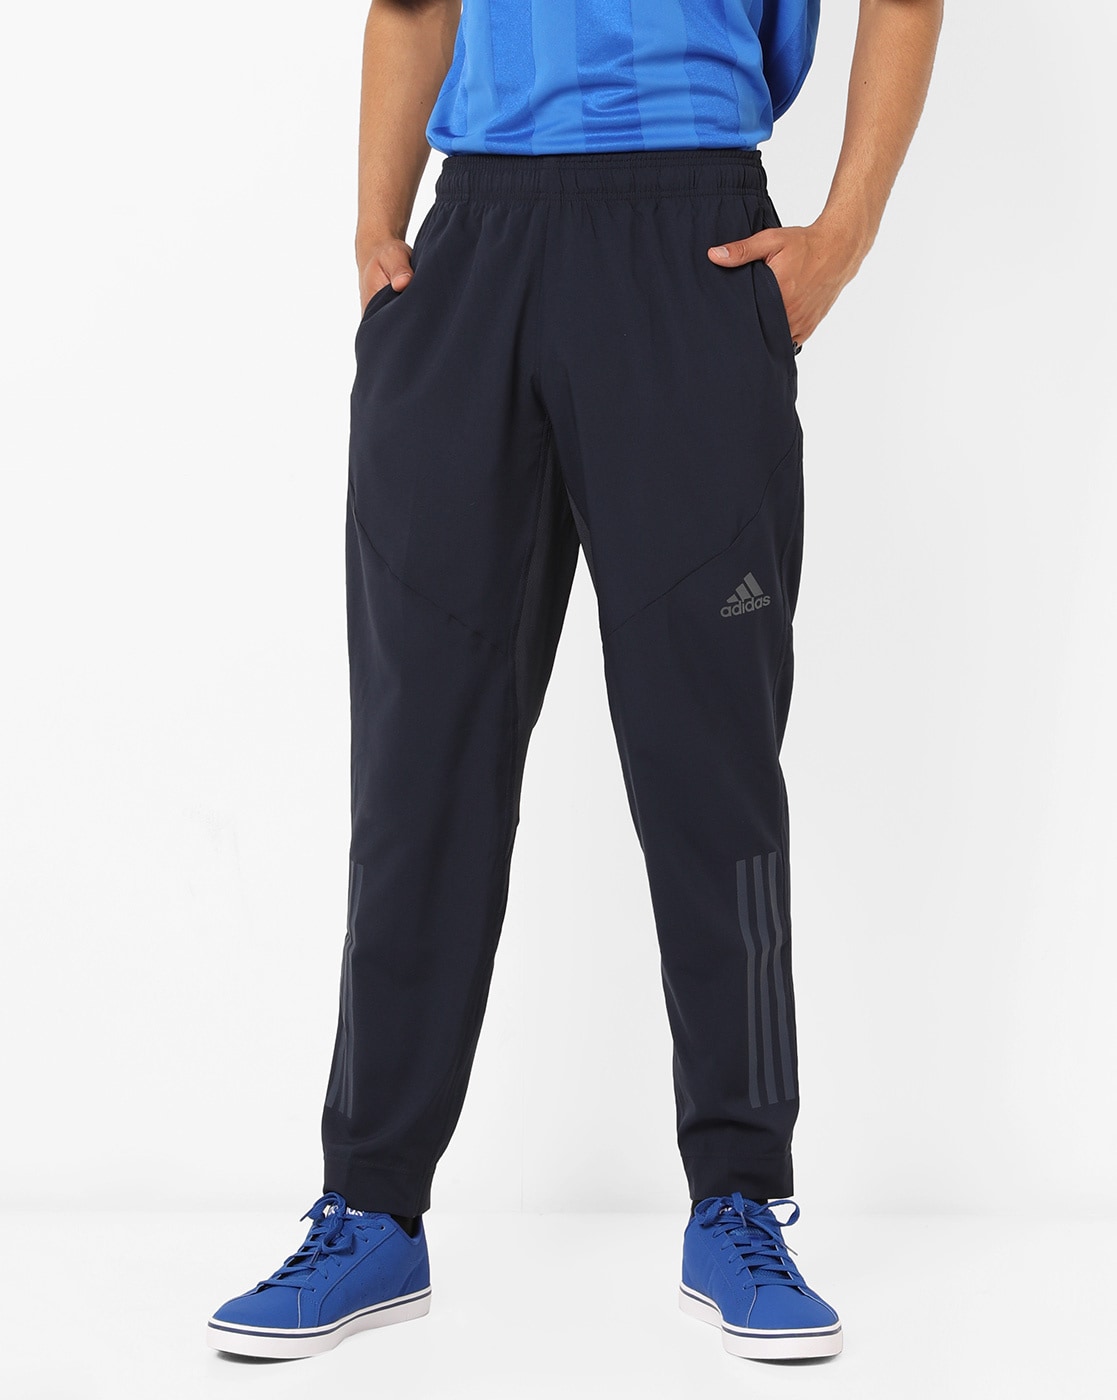 adidas navy blue track pants